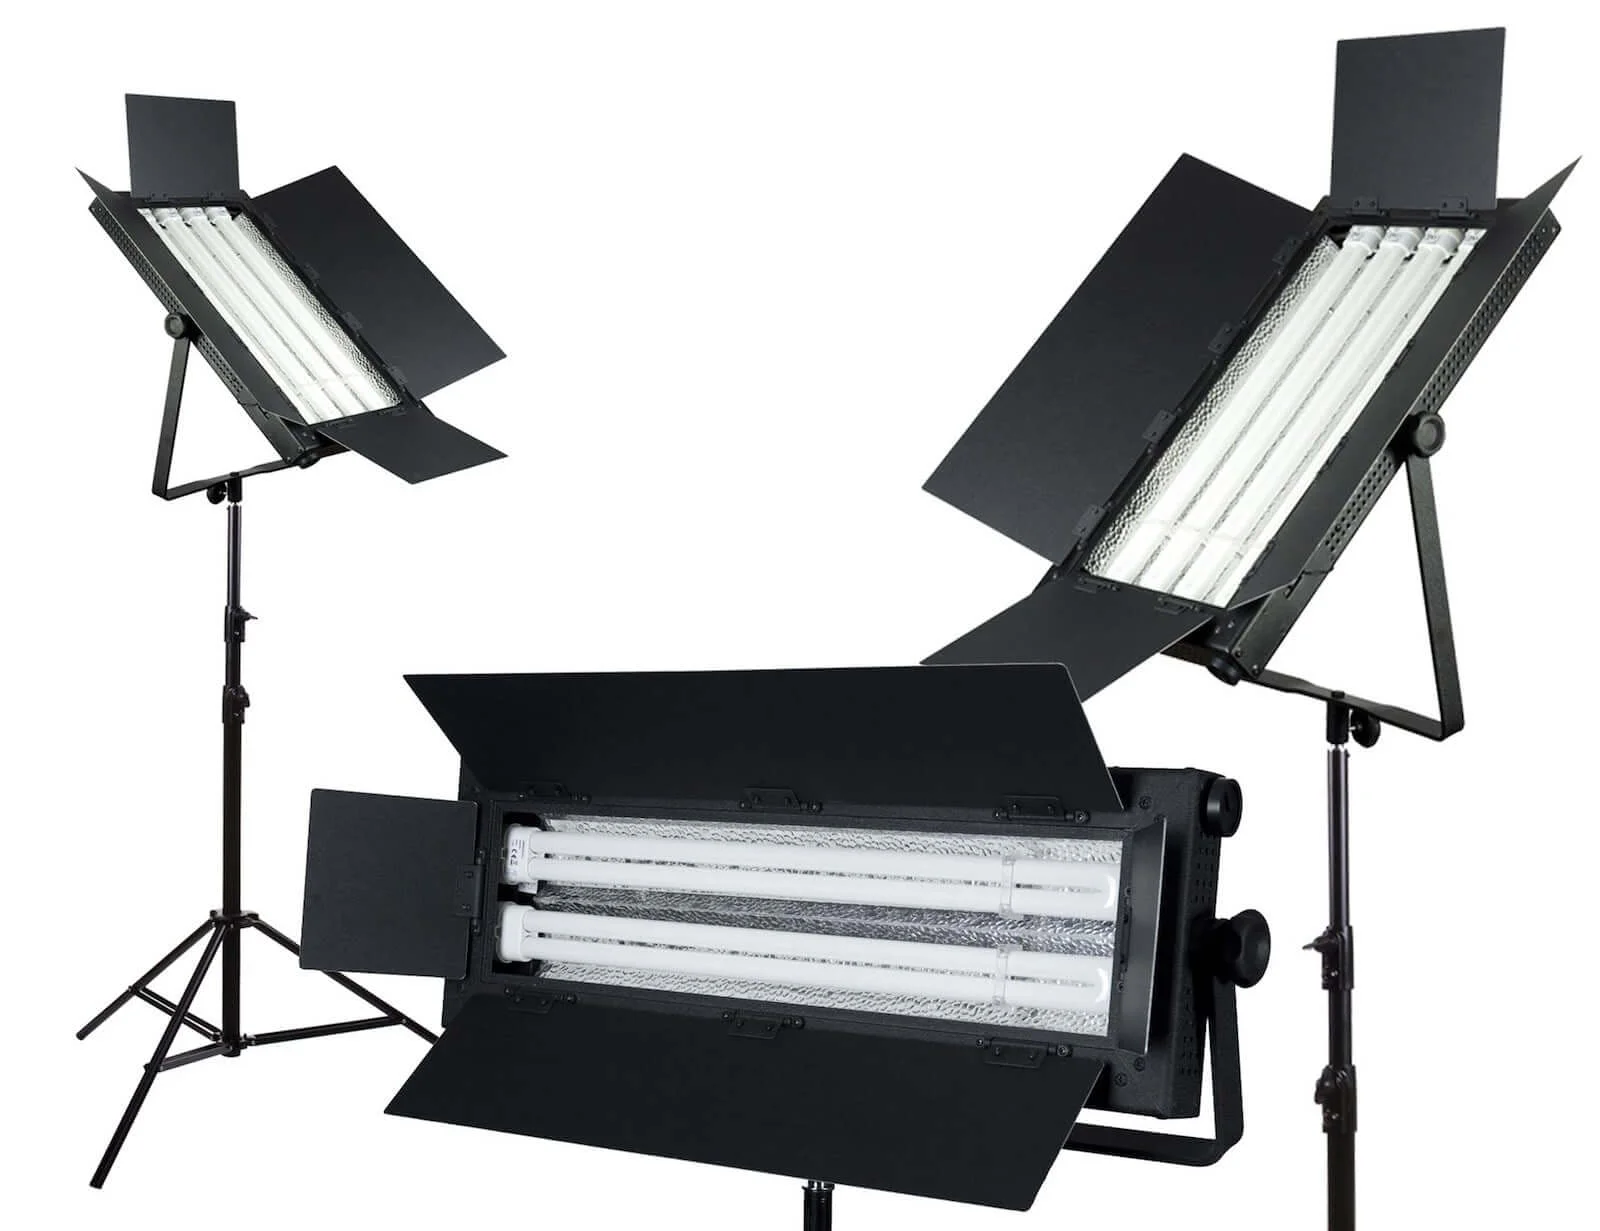 Production Lighting — 4 Types of Lighting Kits